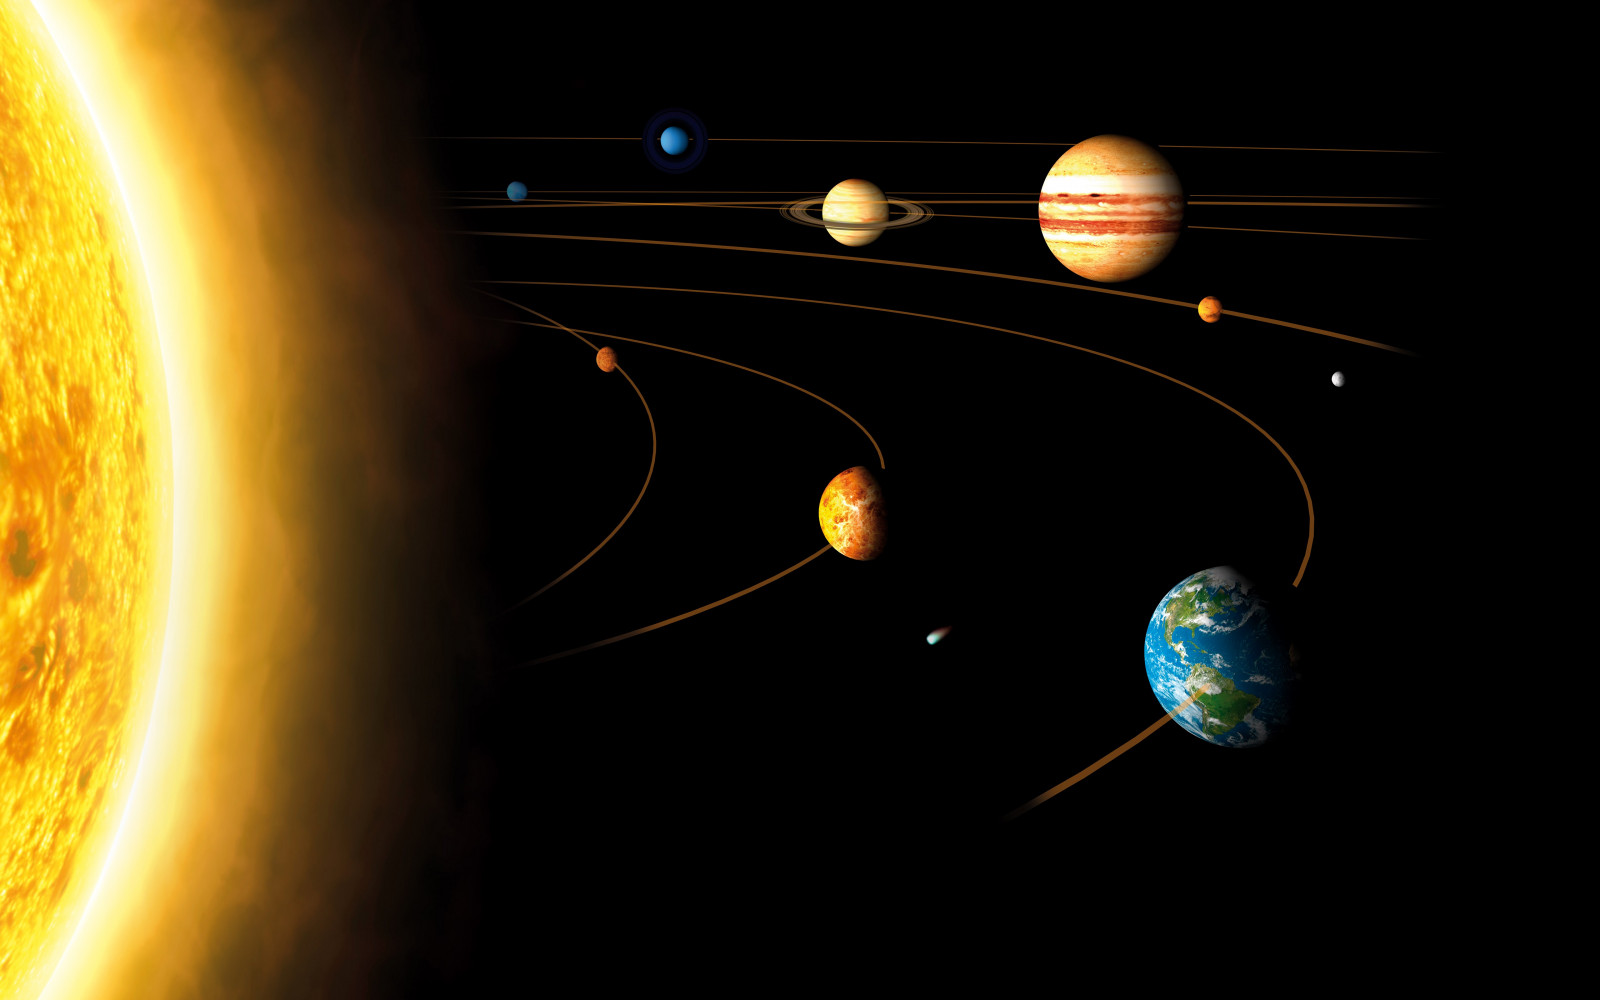 Планеты солнечной системы (Меркурий, Венера, Юпитер, Нептун).